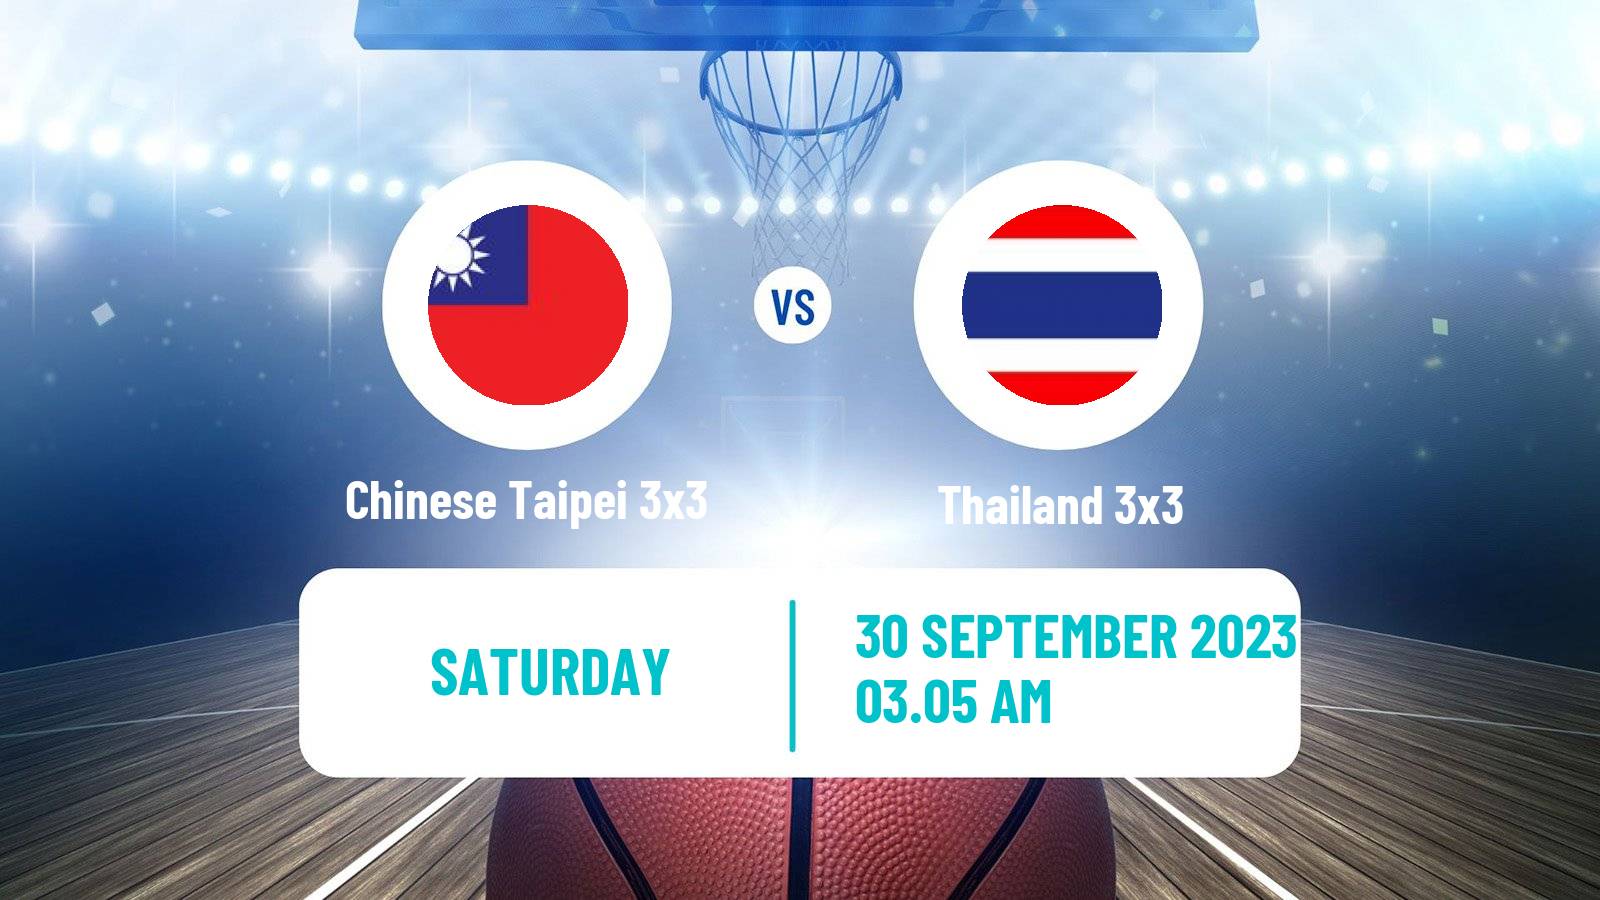 Basketball Asian Games Basketball 3x3 Chinese Taipei 3x3 - Thailand 3x3